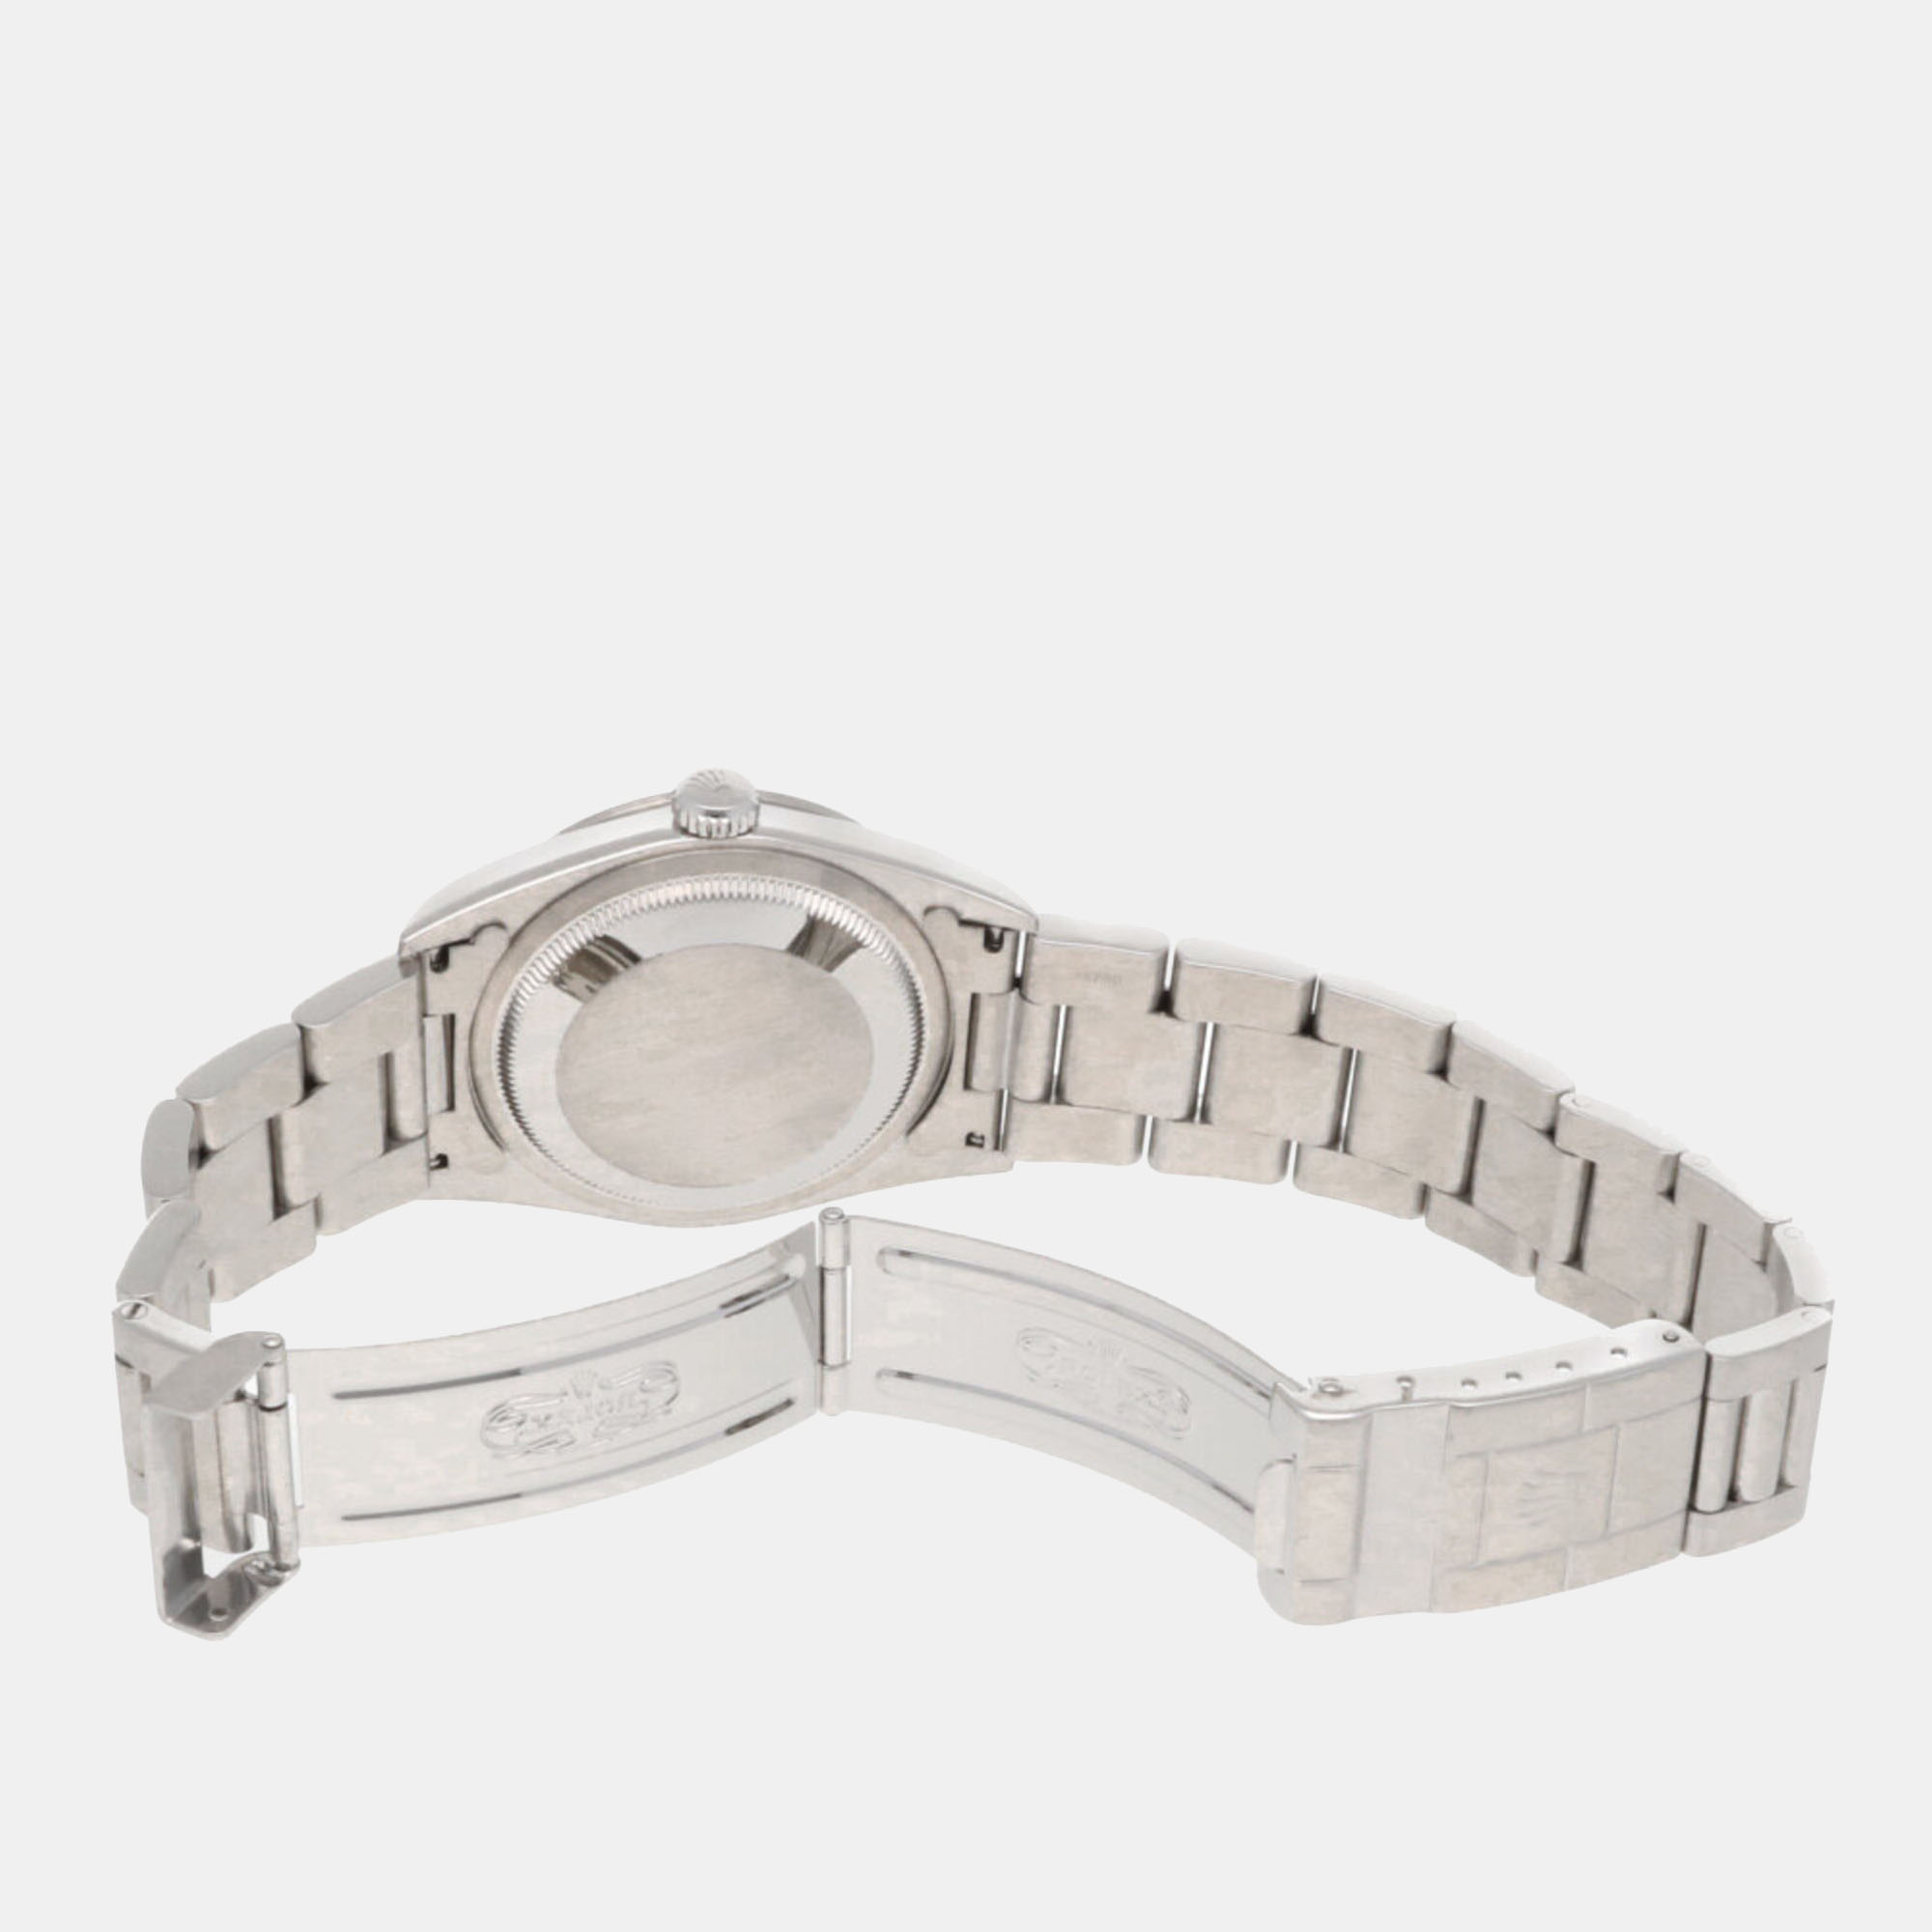 Rolex Black Stainless Steel Explorer 14270 Automatic Men's Wristwatch 35 Mm